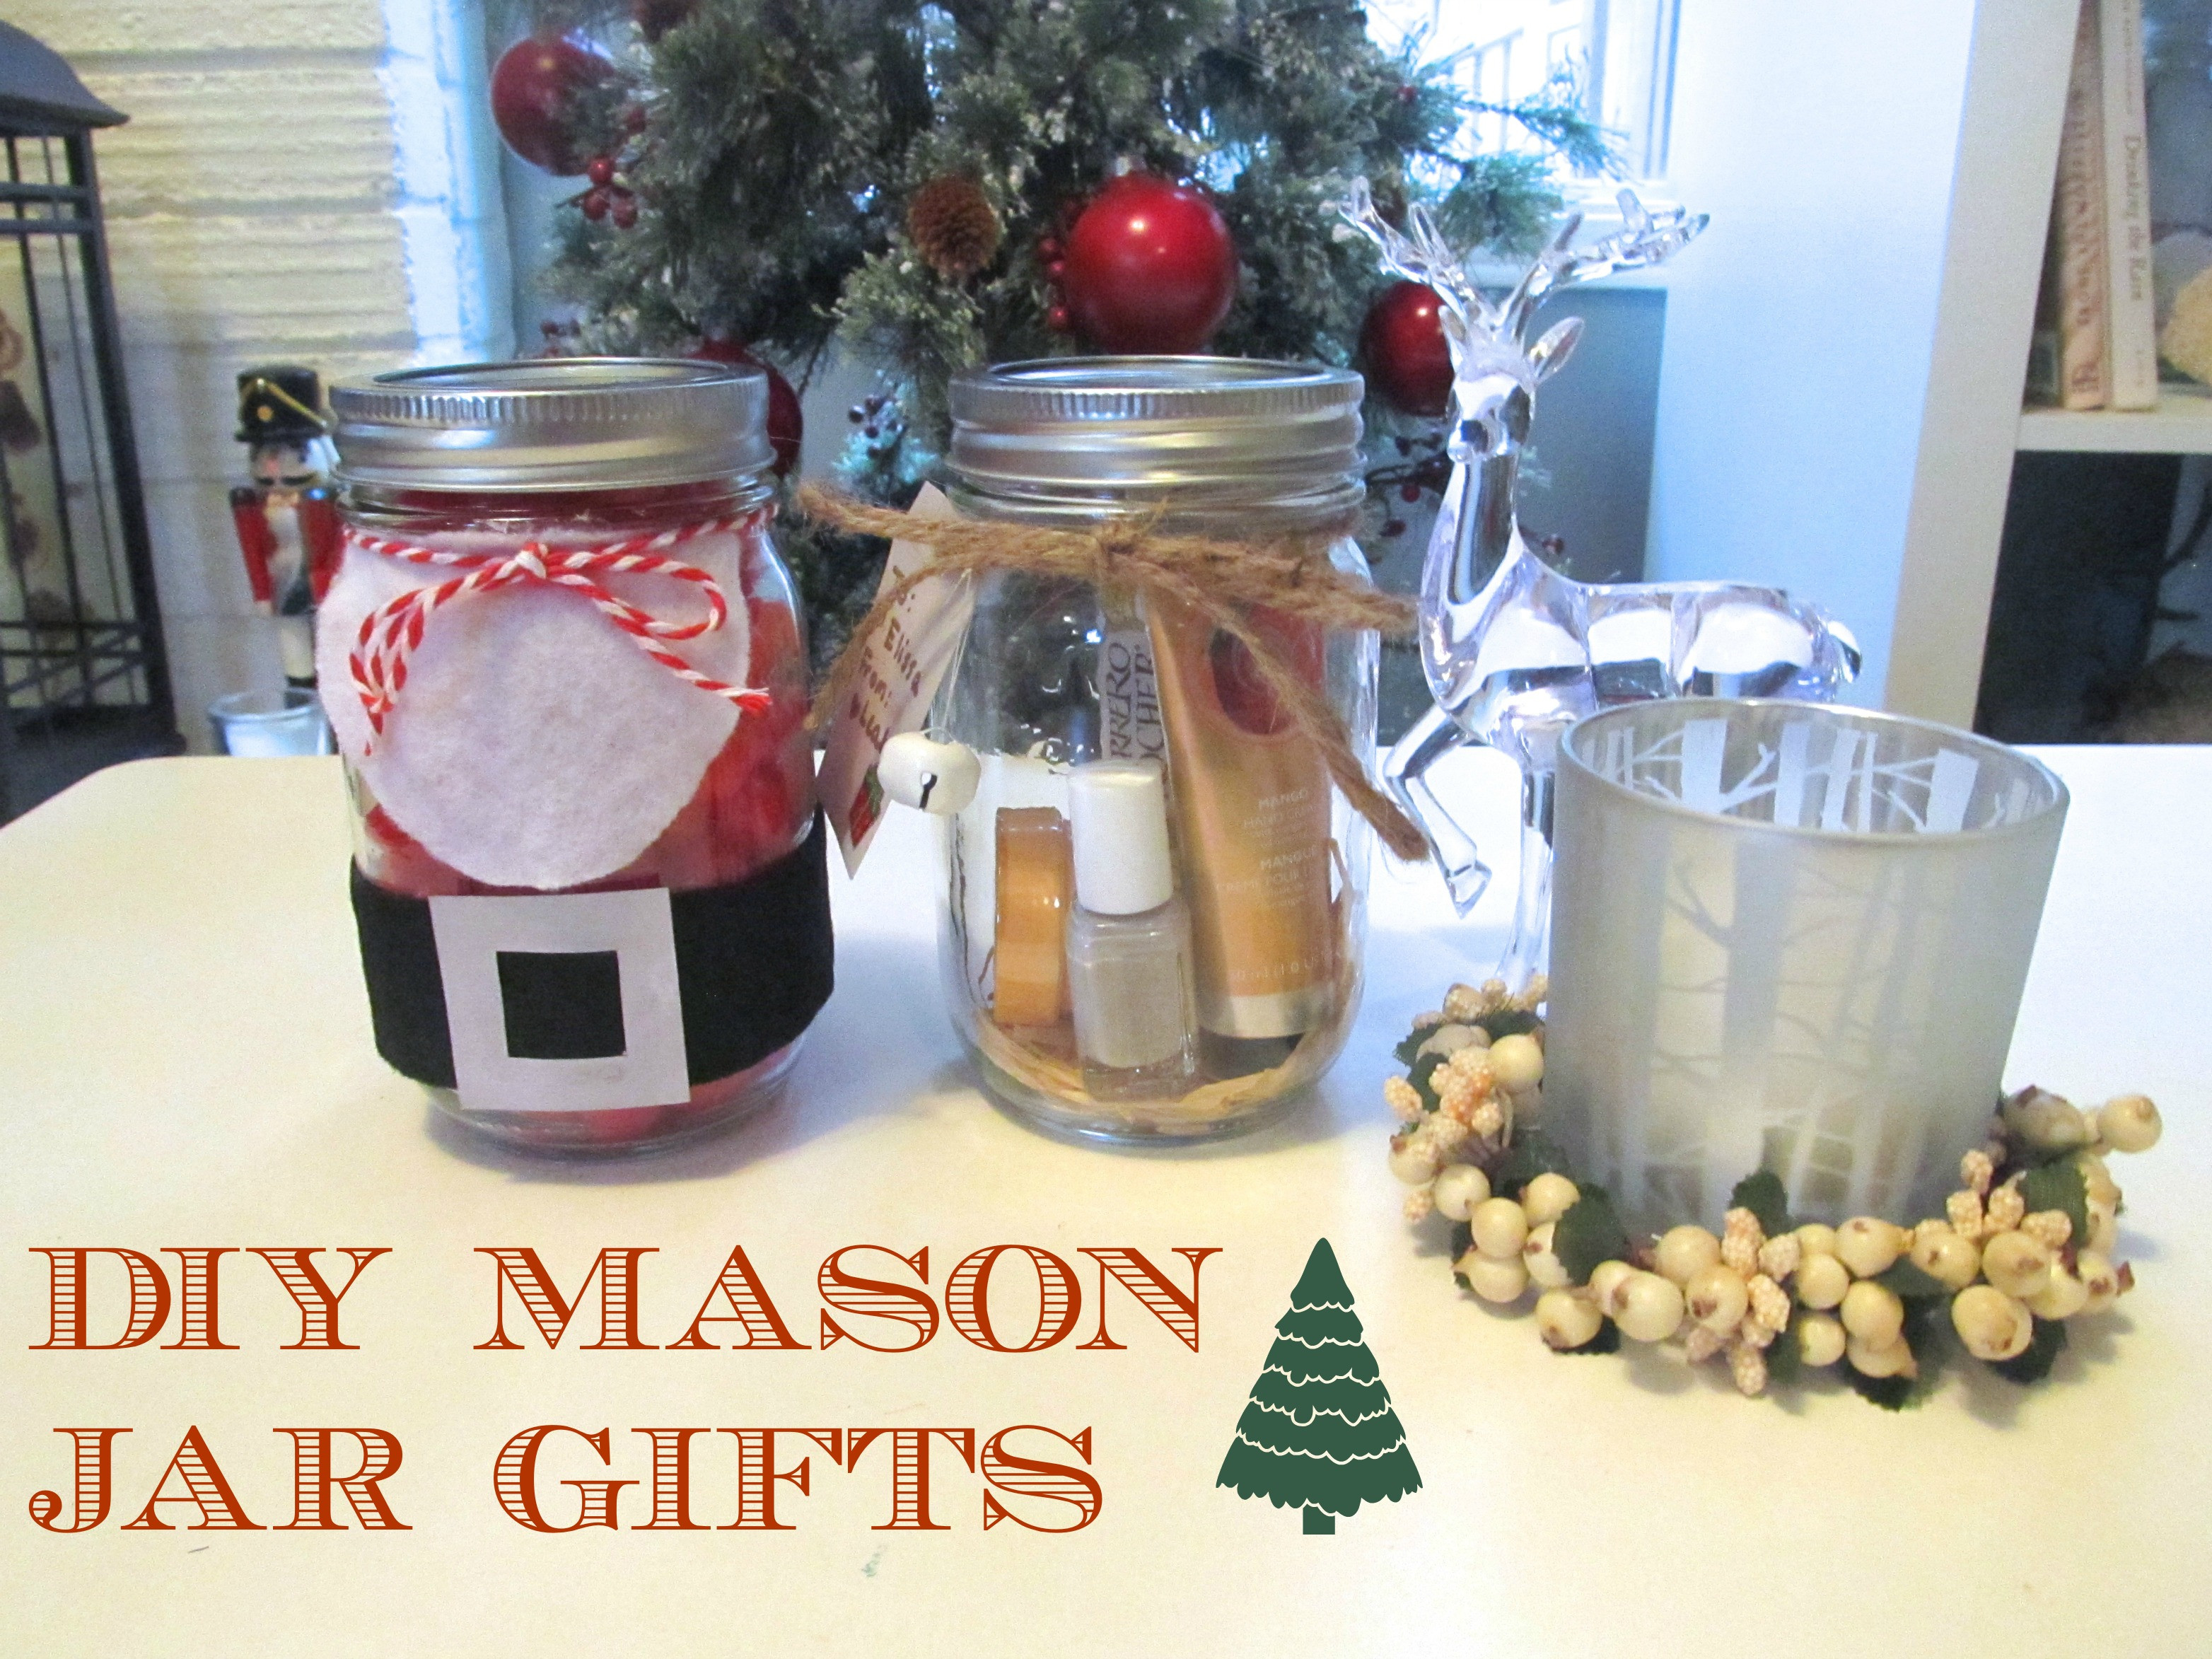 Best ideas about Mason Jar DIY Gifts
. Save or Pin DIY Mason Jar Gifts – Ellerow Now.